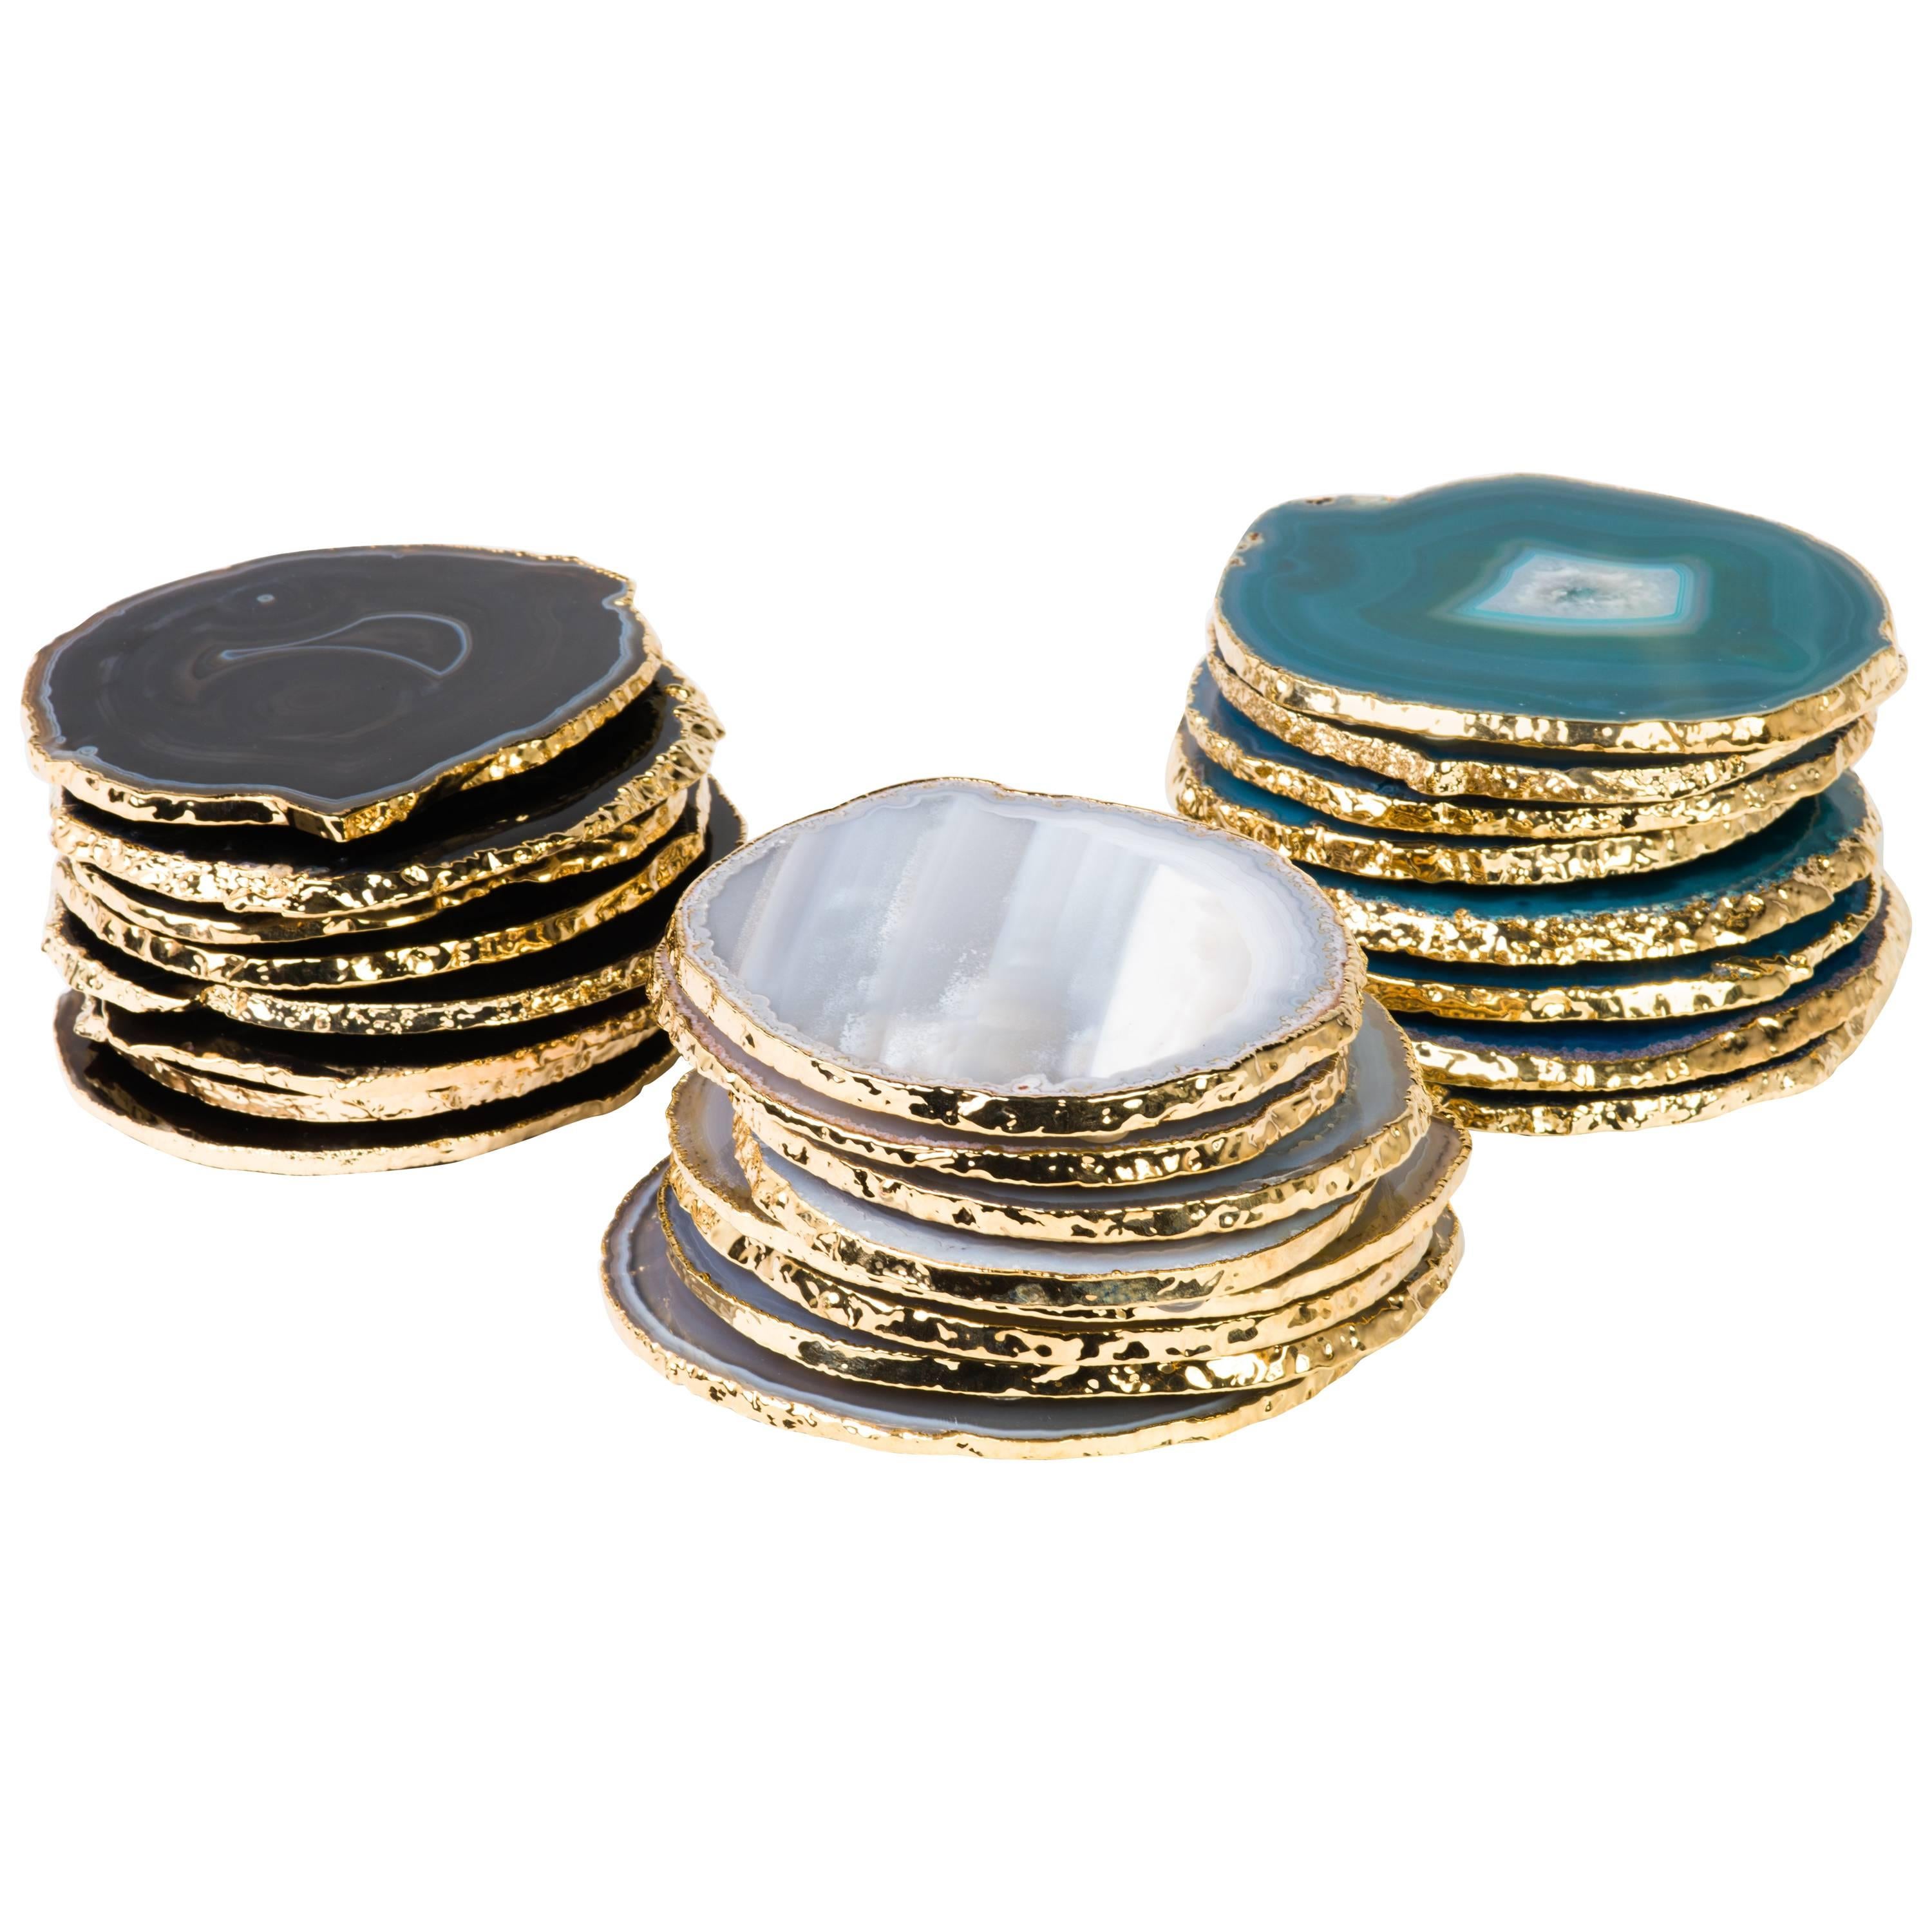 Organic Modern Set of Eight Semi-Precious Gemstone Coasters in Black Agate with 24 K Gold Trim